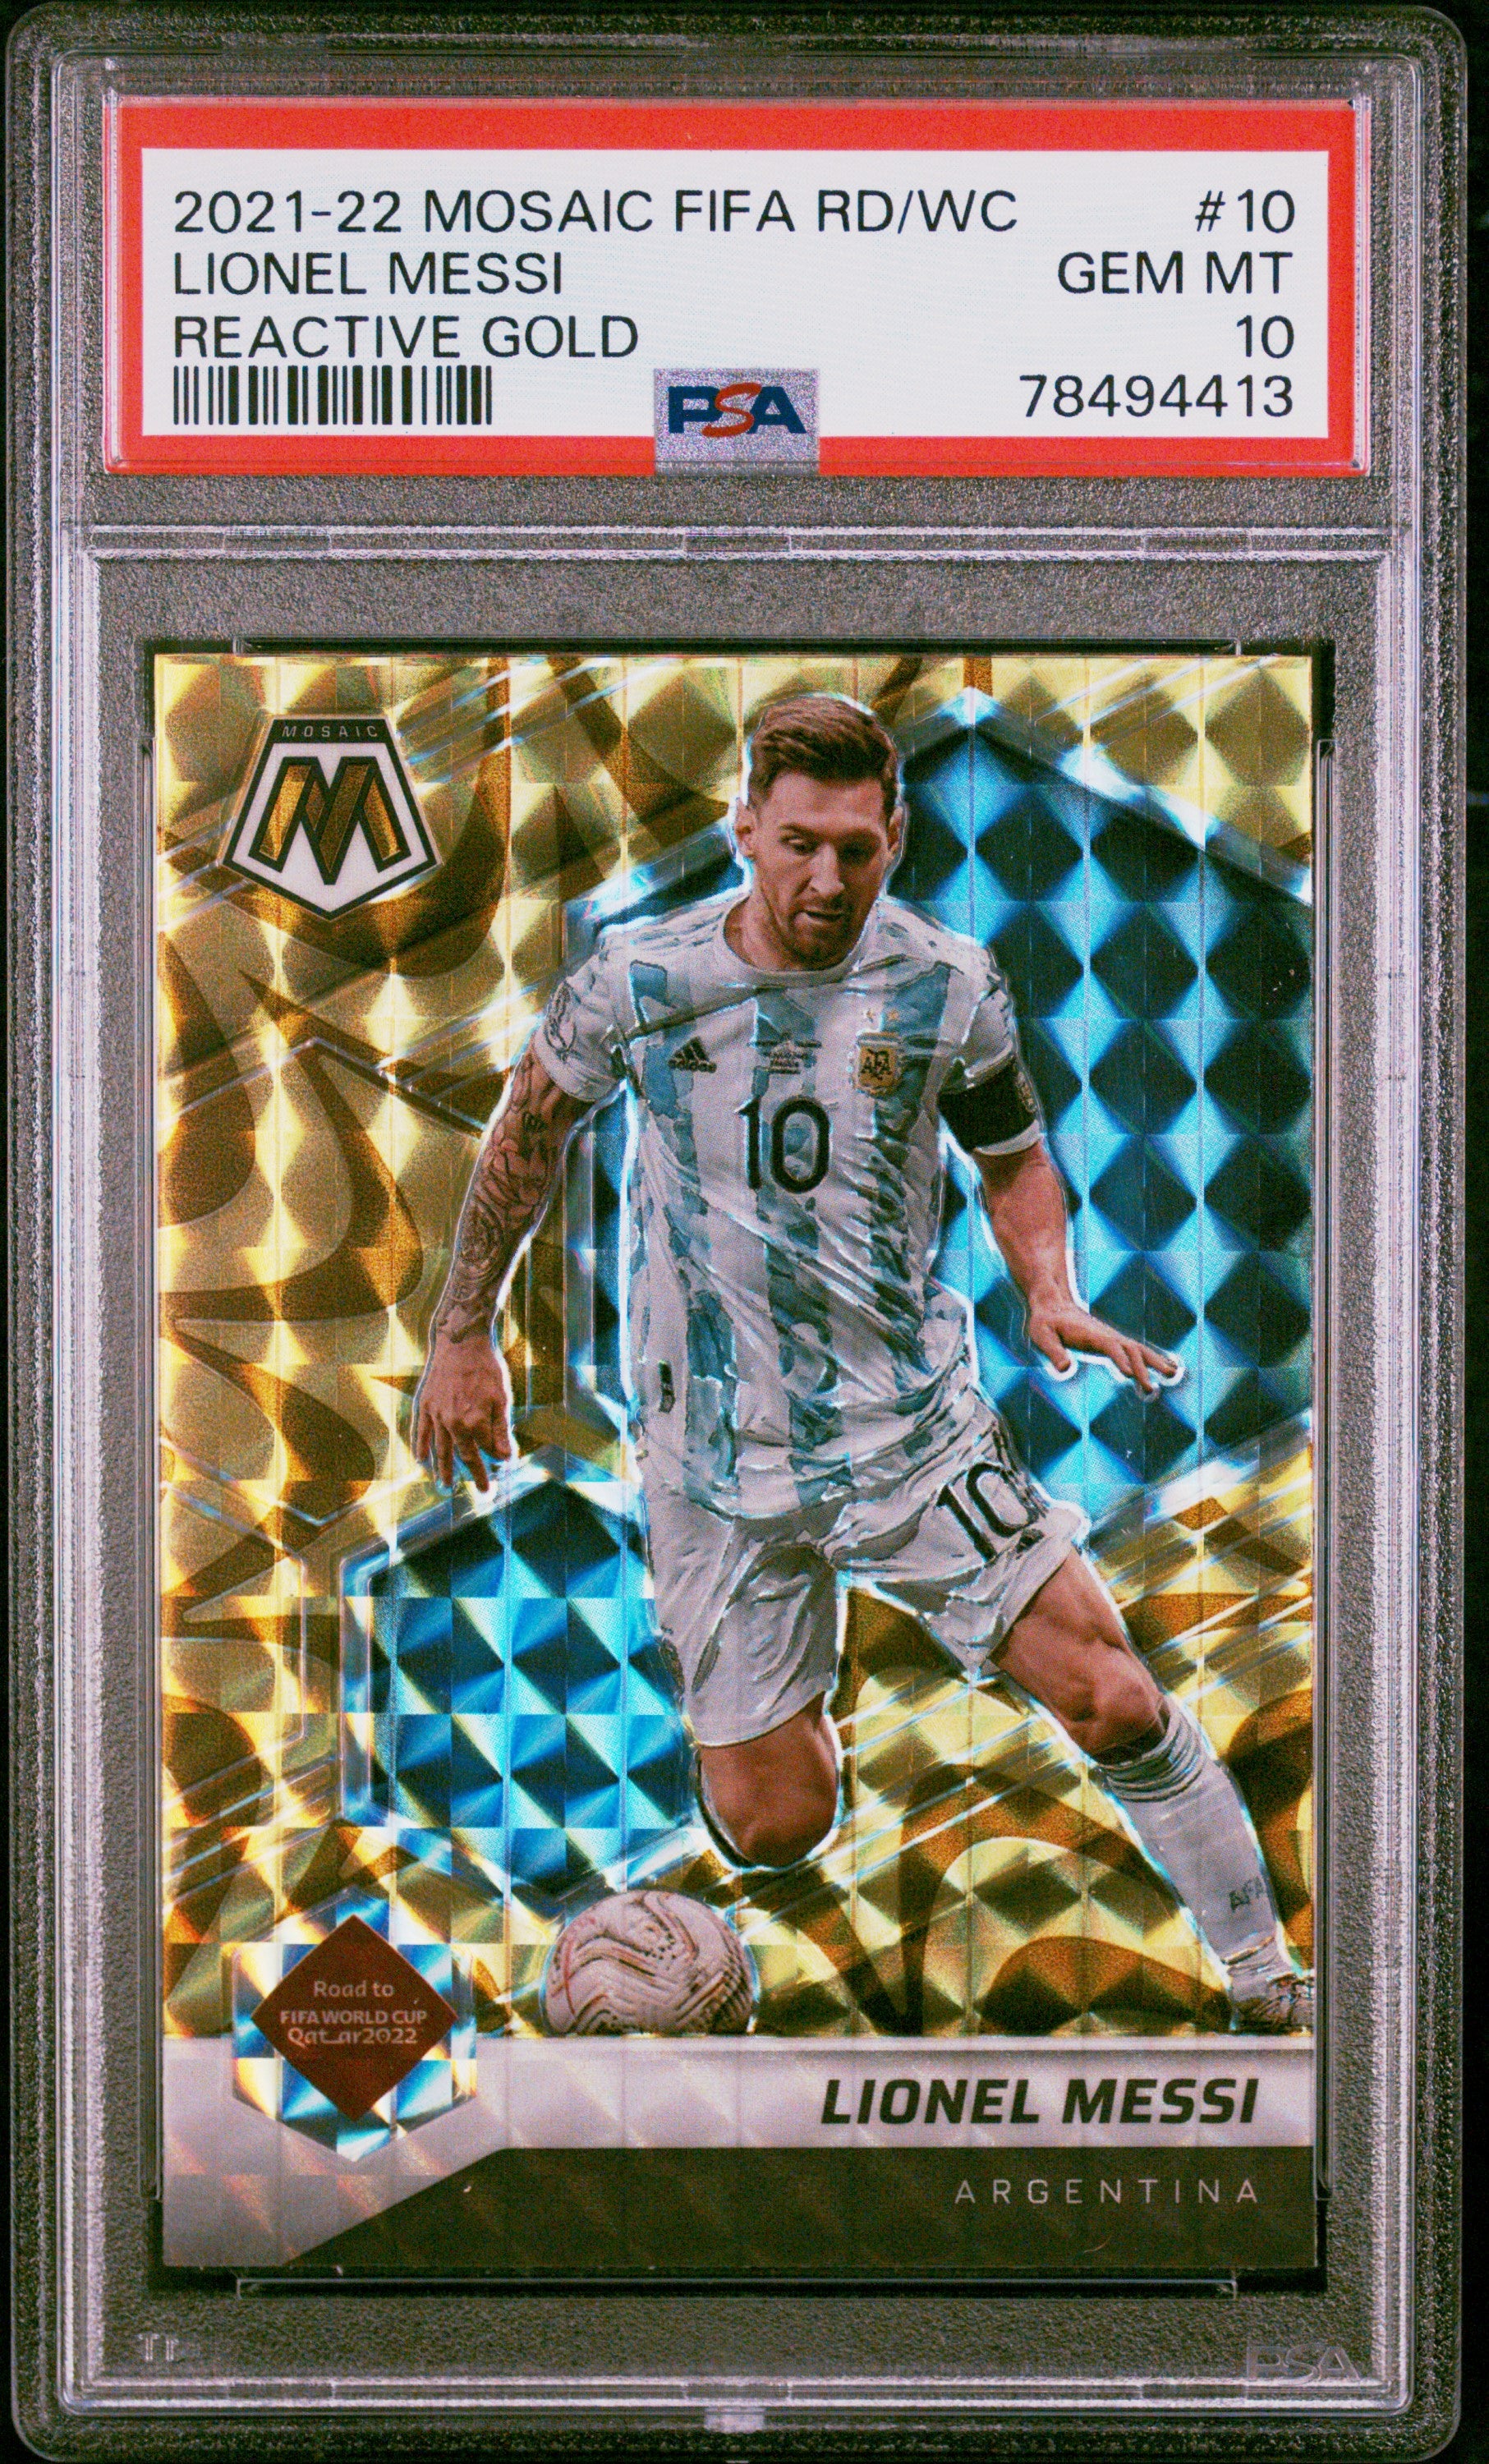 Lionel Messi 2021 Panini Mosaic World Cup Reactive Gold Soccer Card #10 PSA 10-Powers Sports Memorabilia